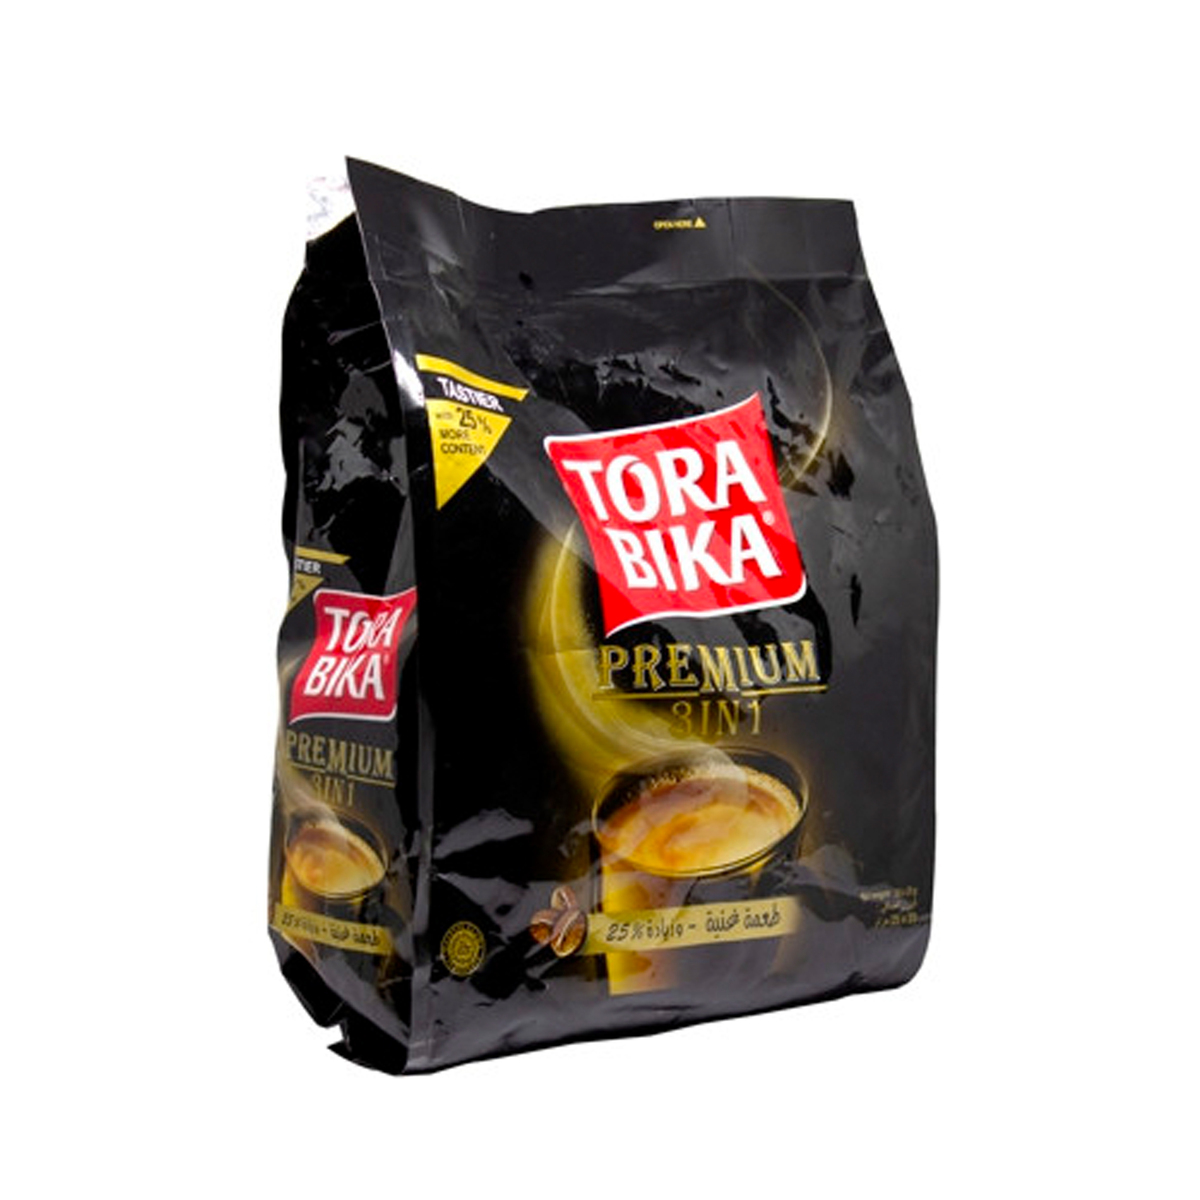 Tora Bika Premium 3in1 Instant Coffee 20 x 25 g